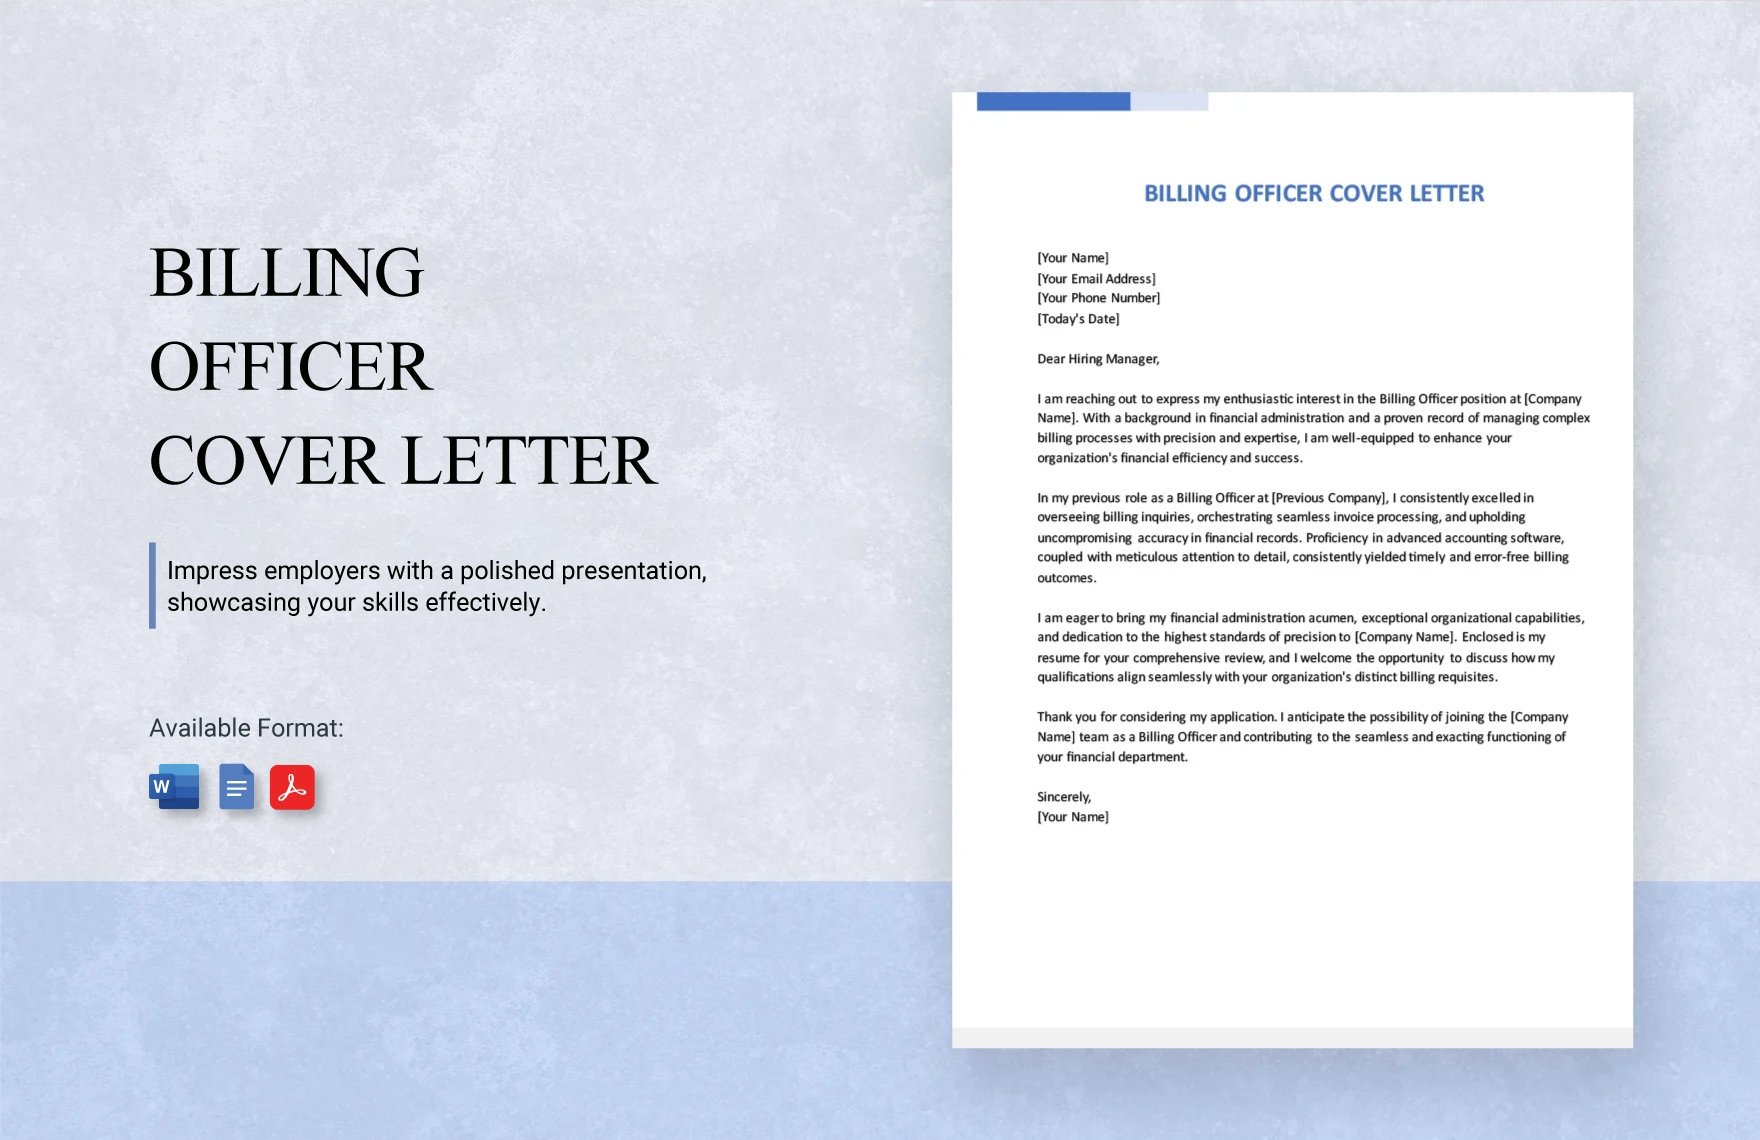 Billing Officer Cover Letter in Word, Google Docs, PDF